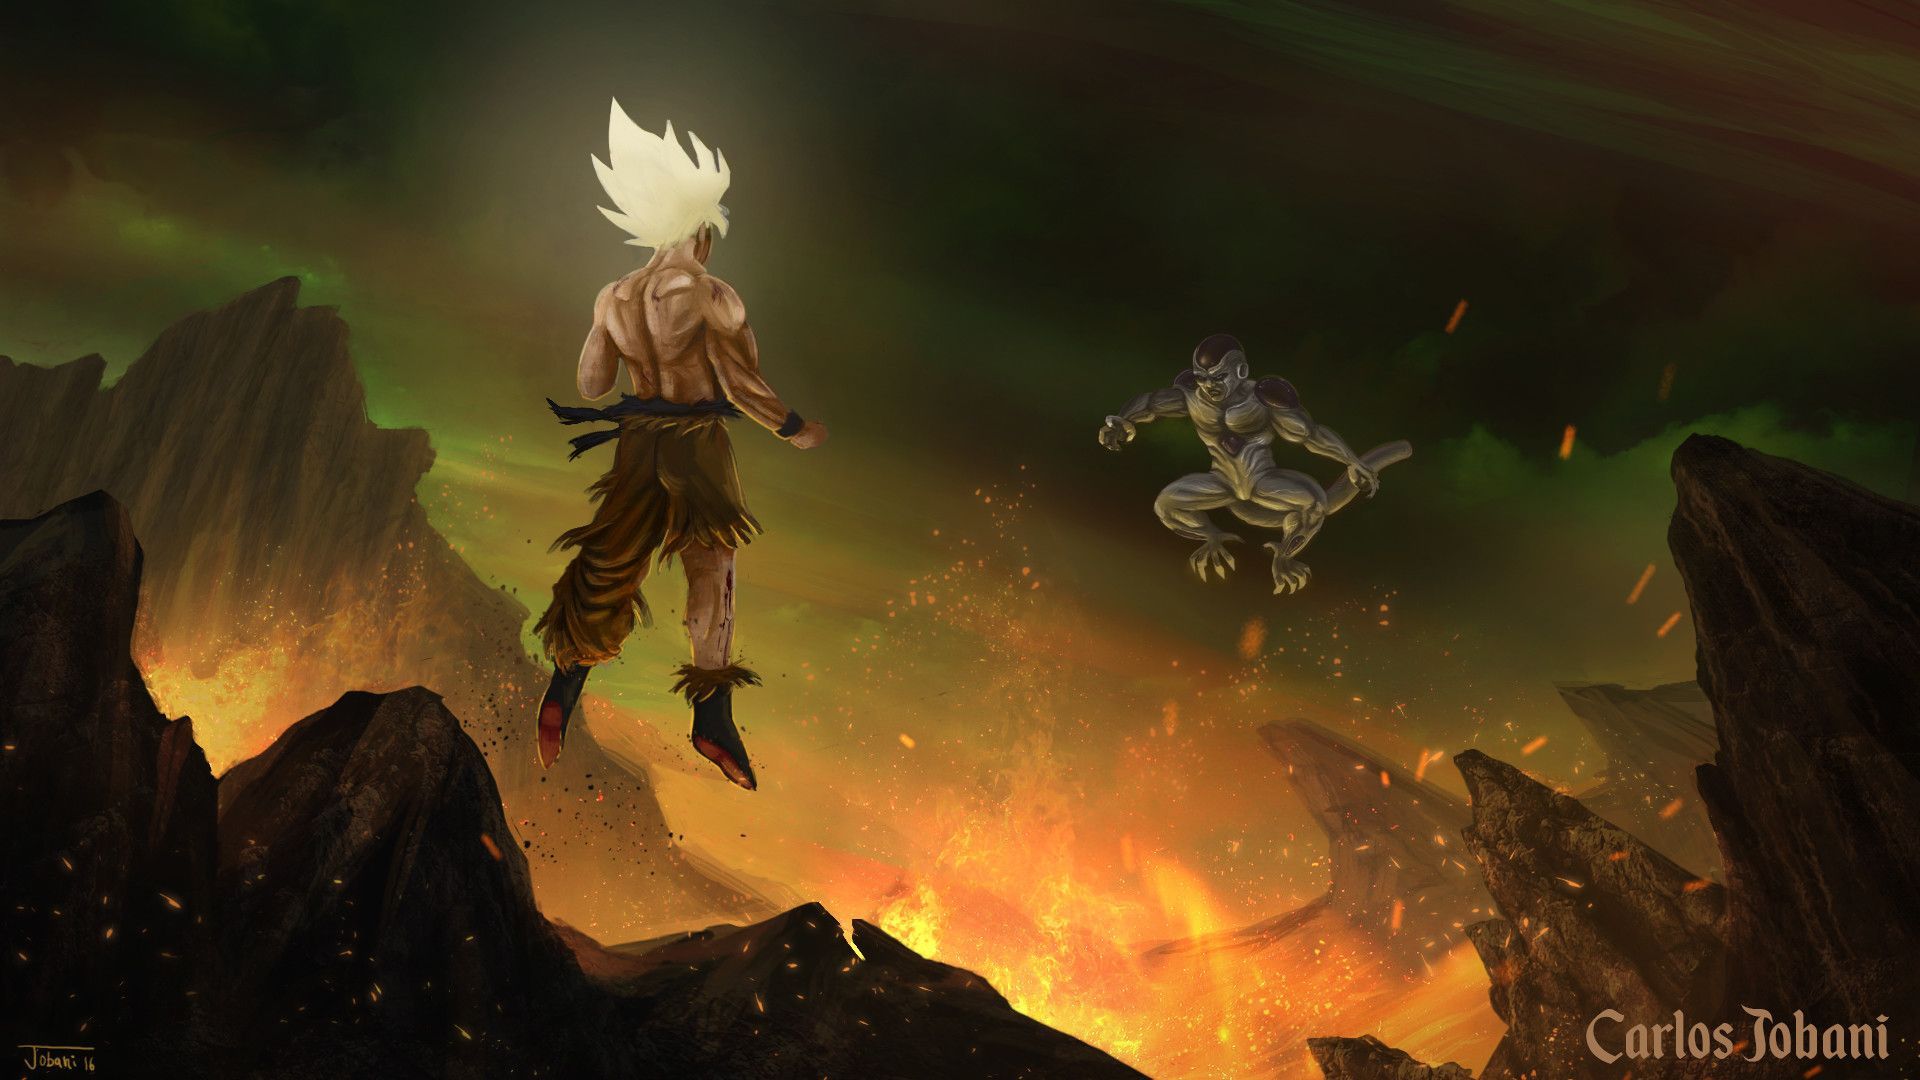 Goku vs Frieza Wallpaper Free Goku vs Frieza Background